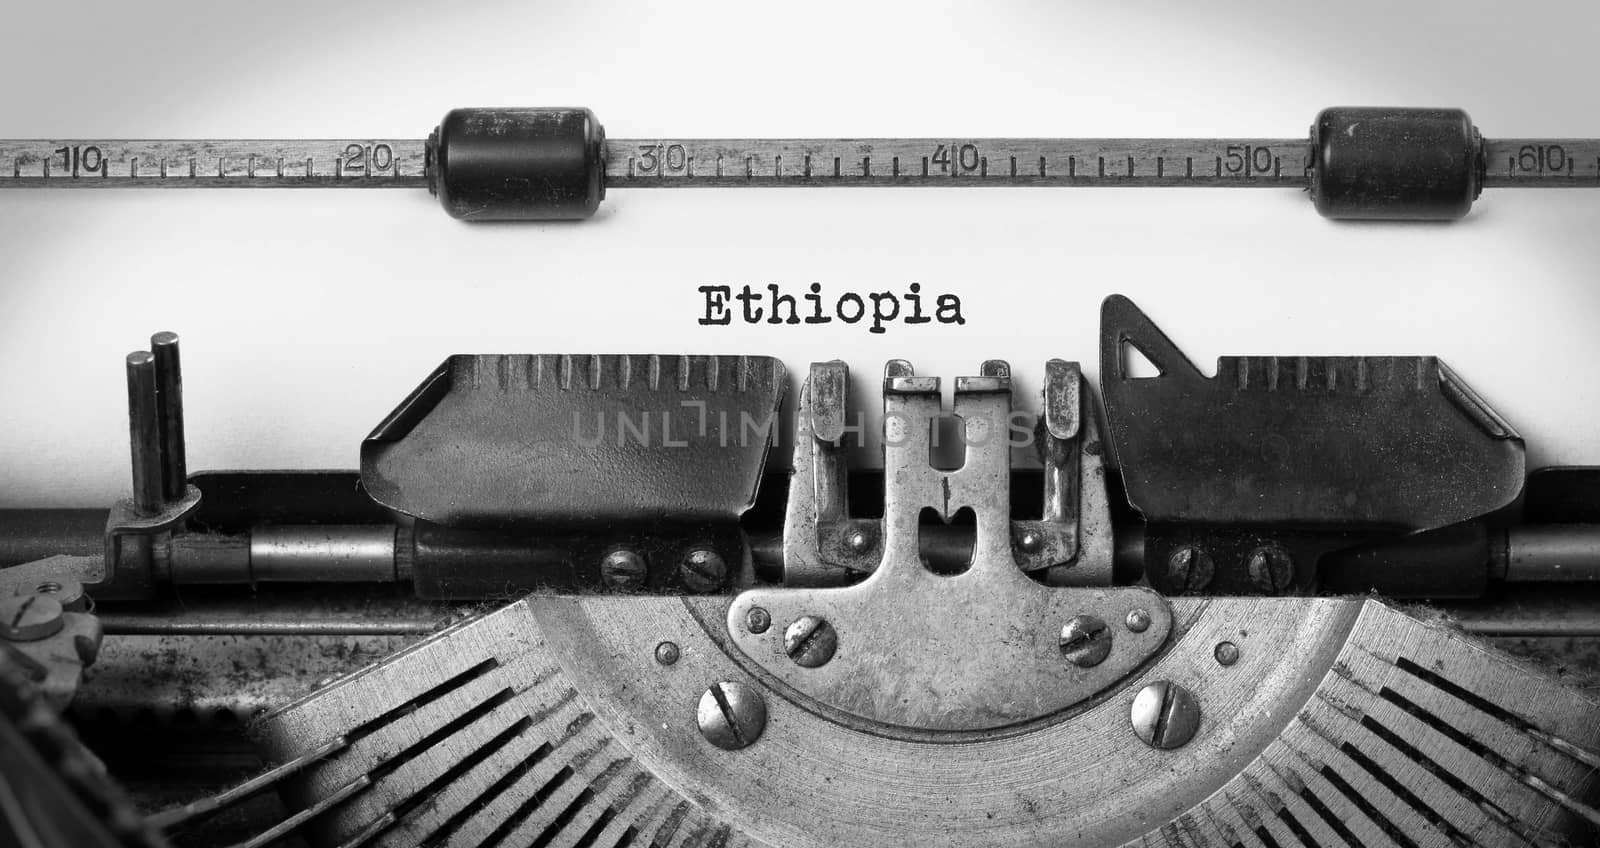 Old typewriter - Ethiopia by michaklootwijk